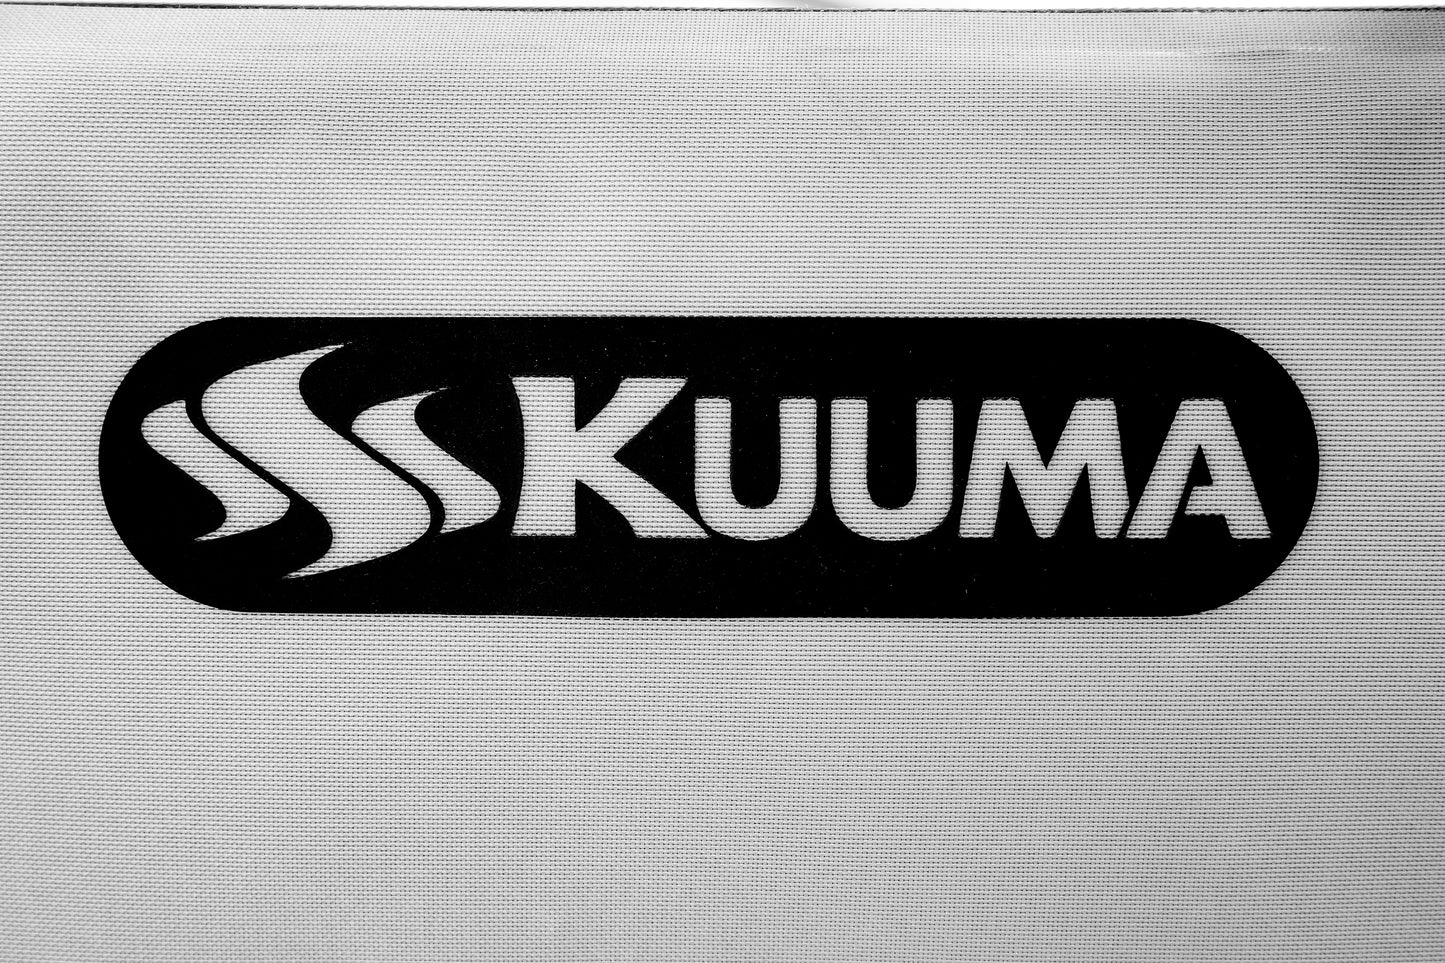 Kuuma Fish Bag Cooler - 210 Quart